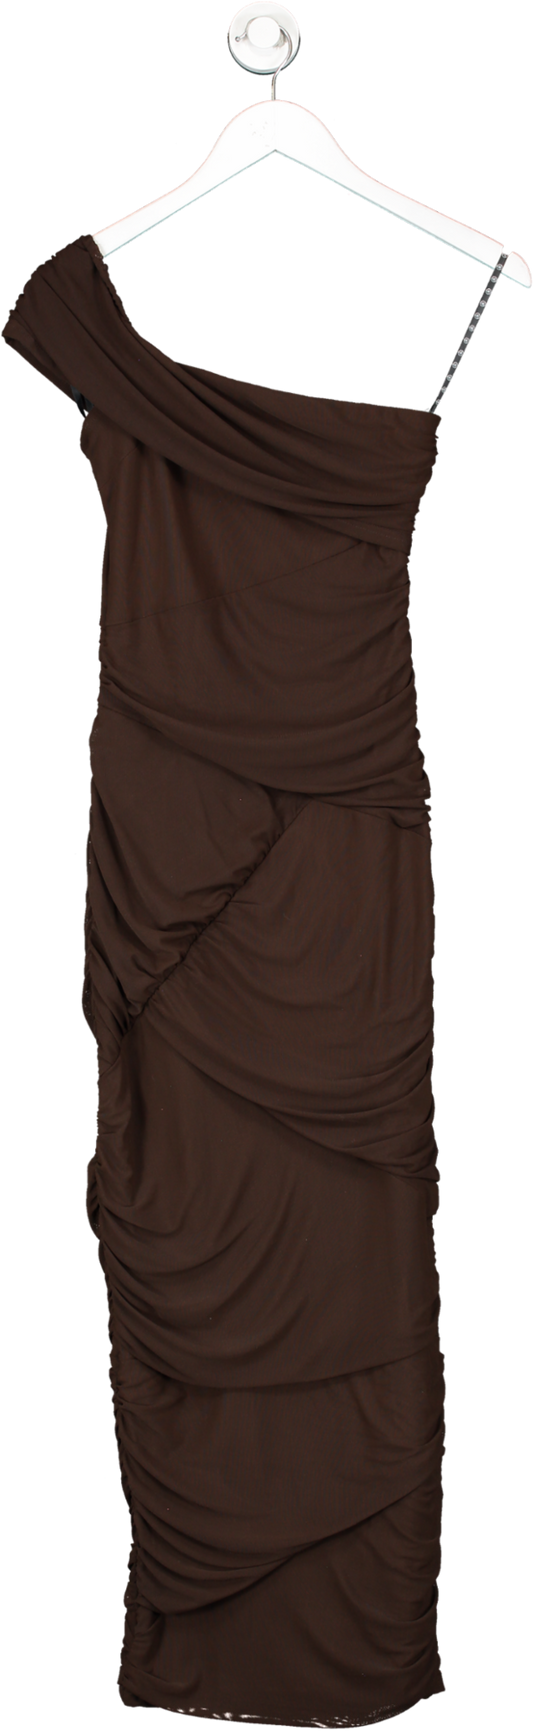 Missguided Brown Ruched Mesh Dress, One Shoulder UK 6